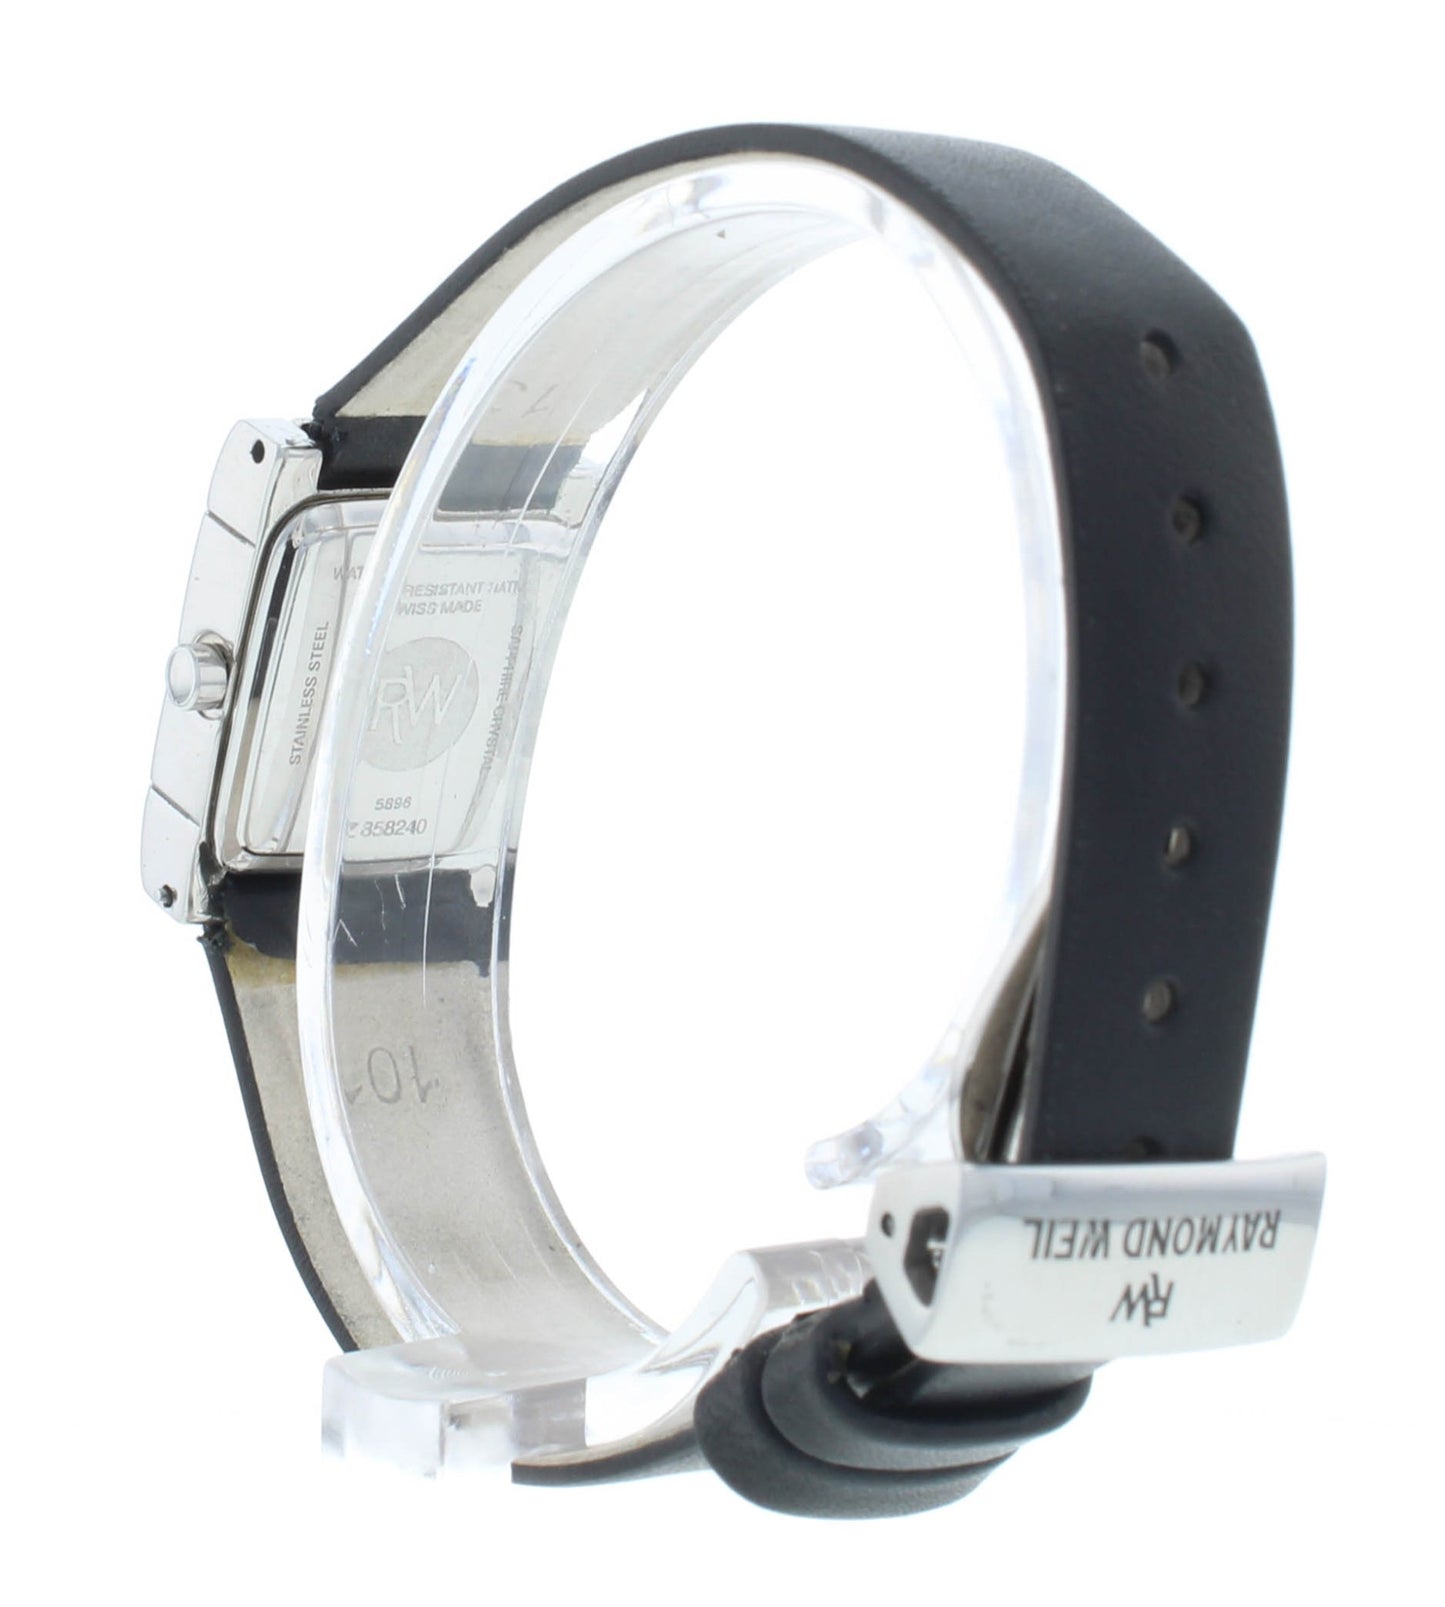 Raymond Weil Tema 17mm White MOP Dial Steel Quartz Ladies Watch 5896-STC1